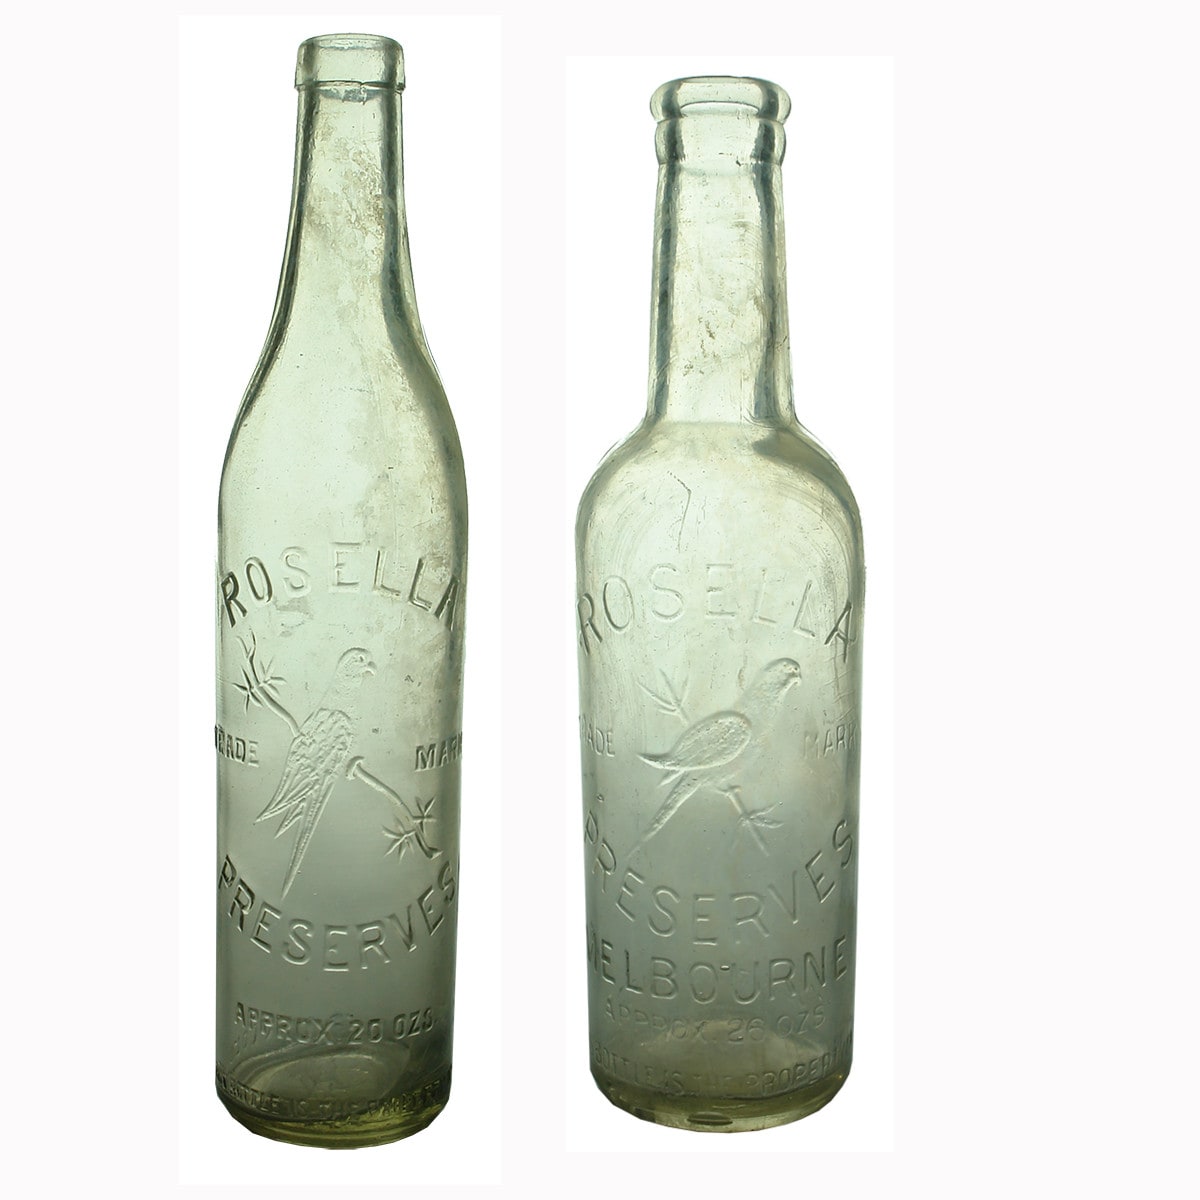 Pair of Large Rosella Preserves Bottles